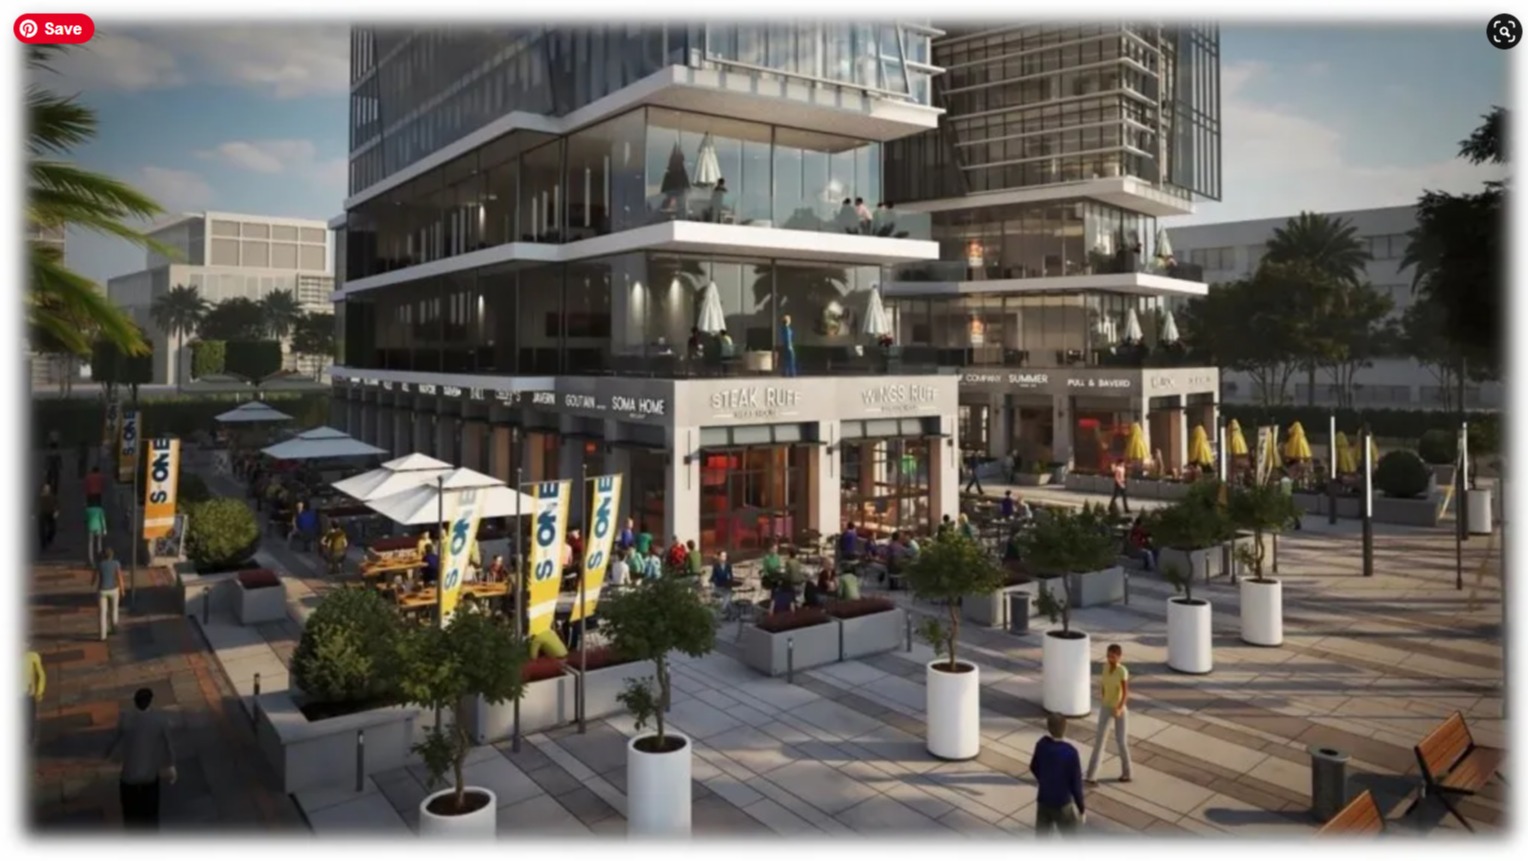 S-One New Capital Mall Al Safwa